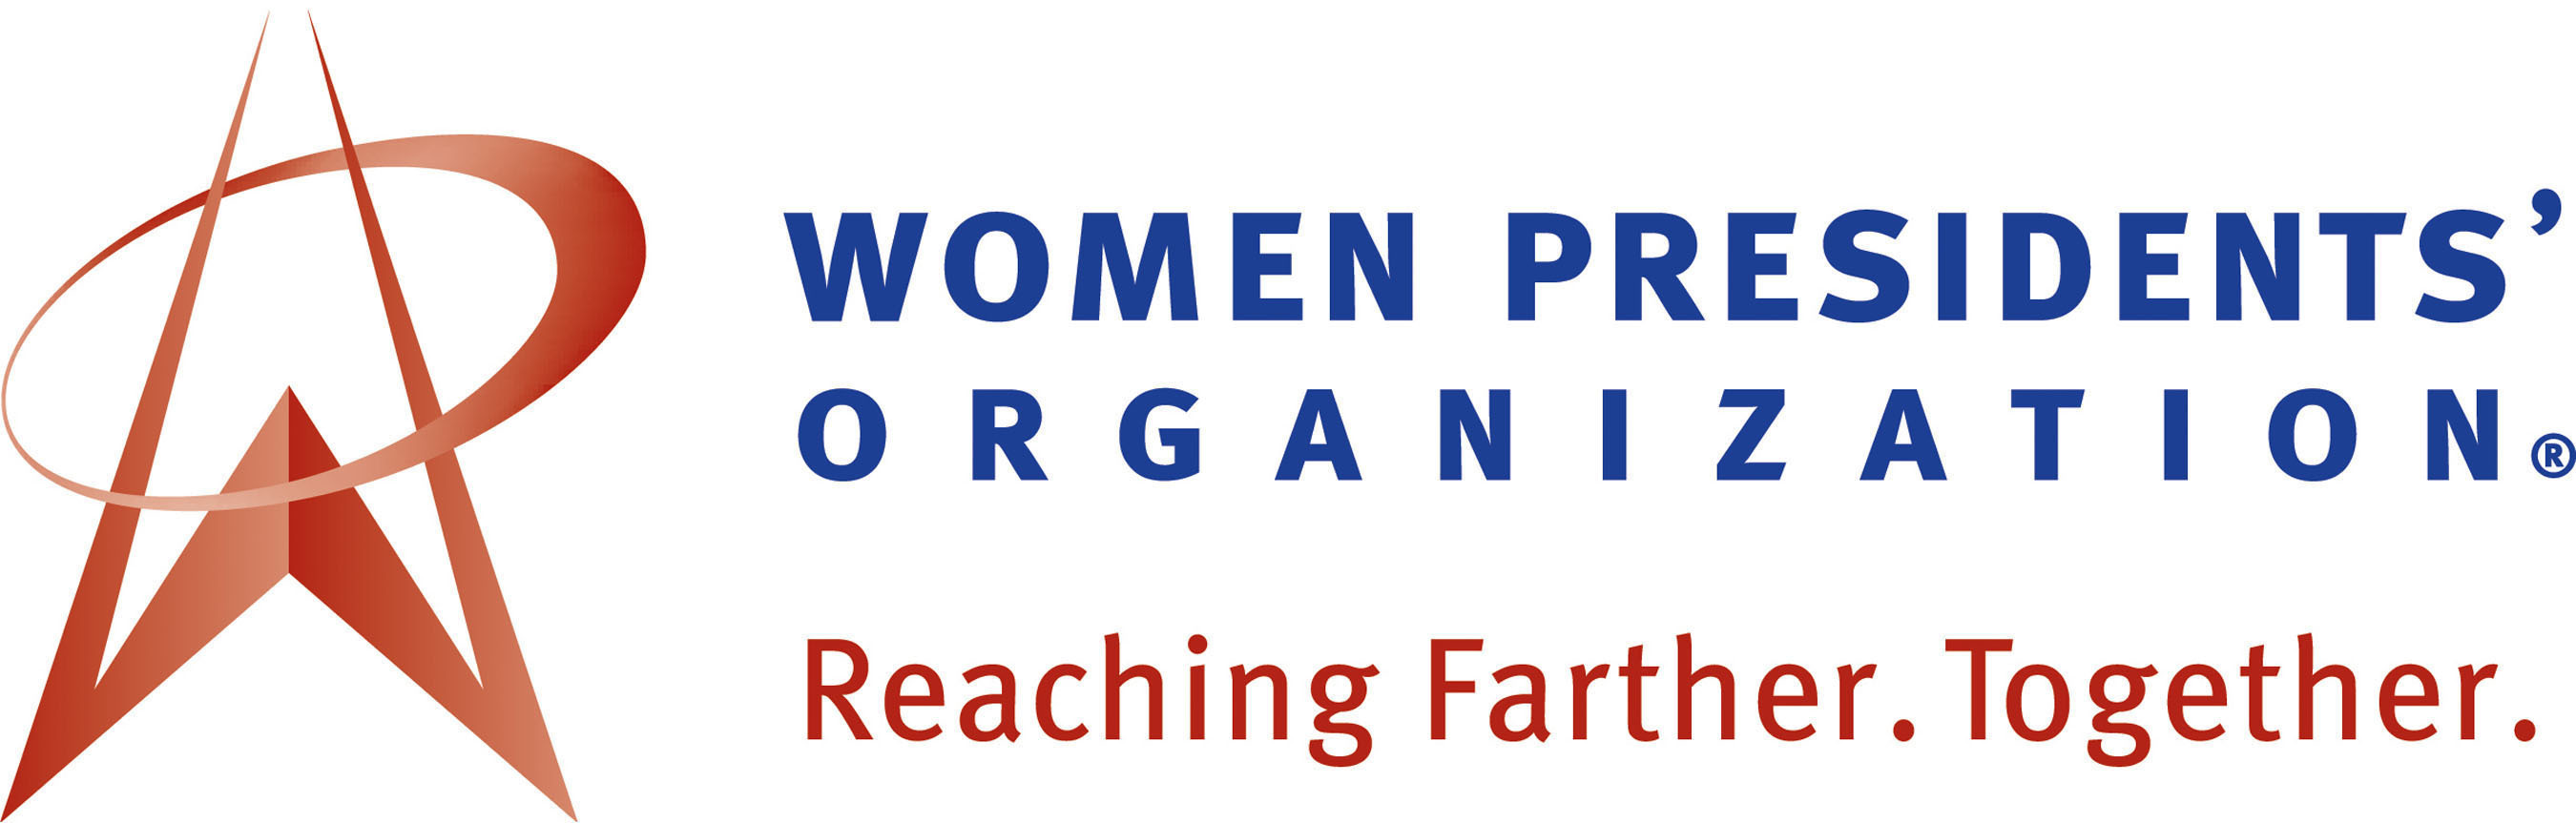 Women Presidents' Organization logo.